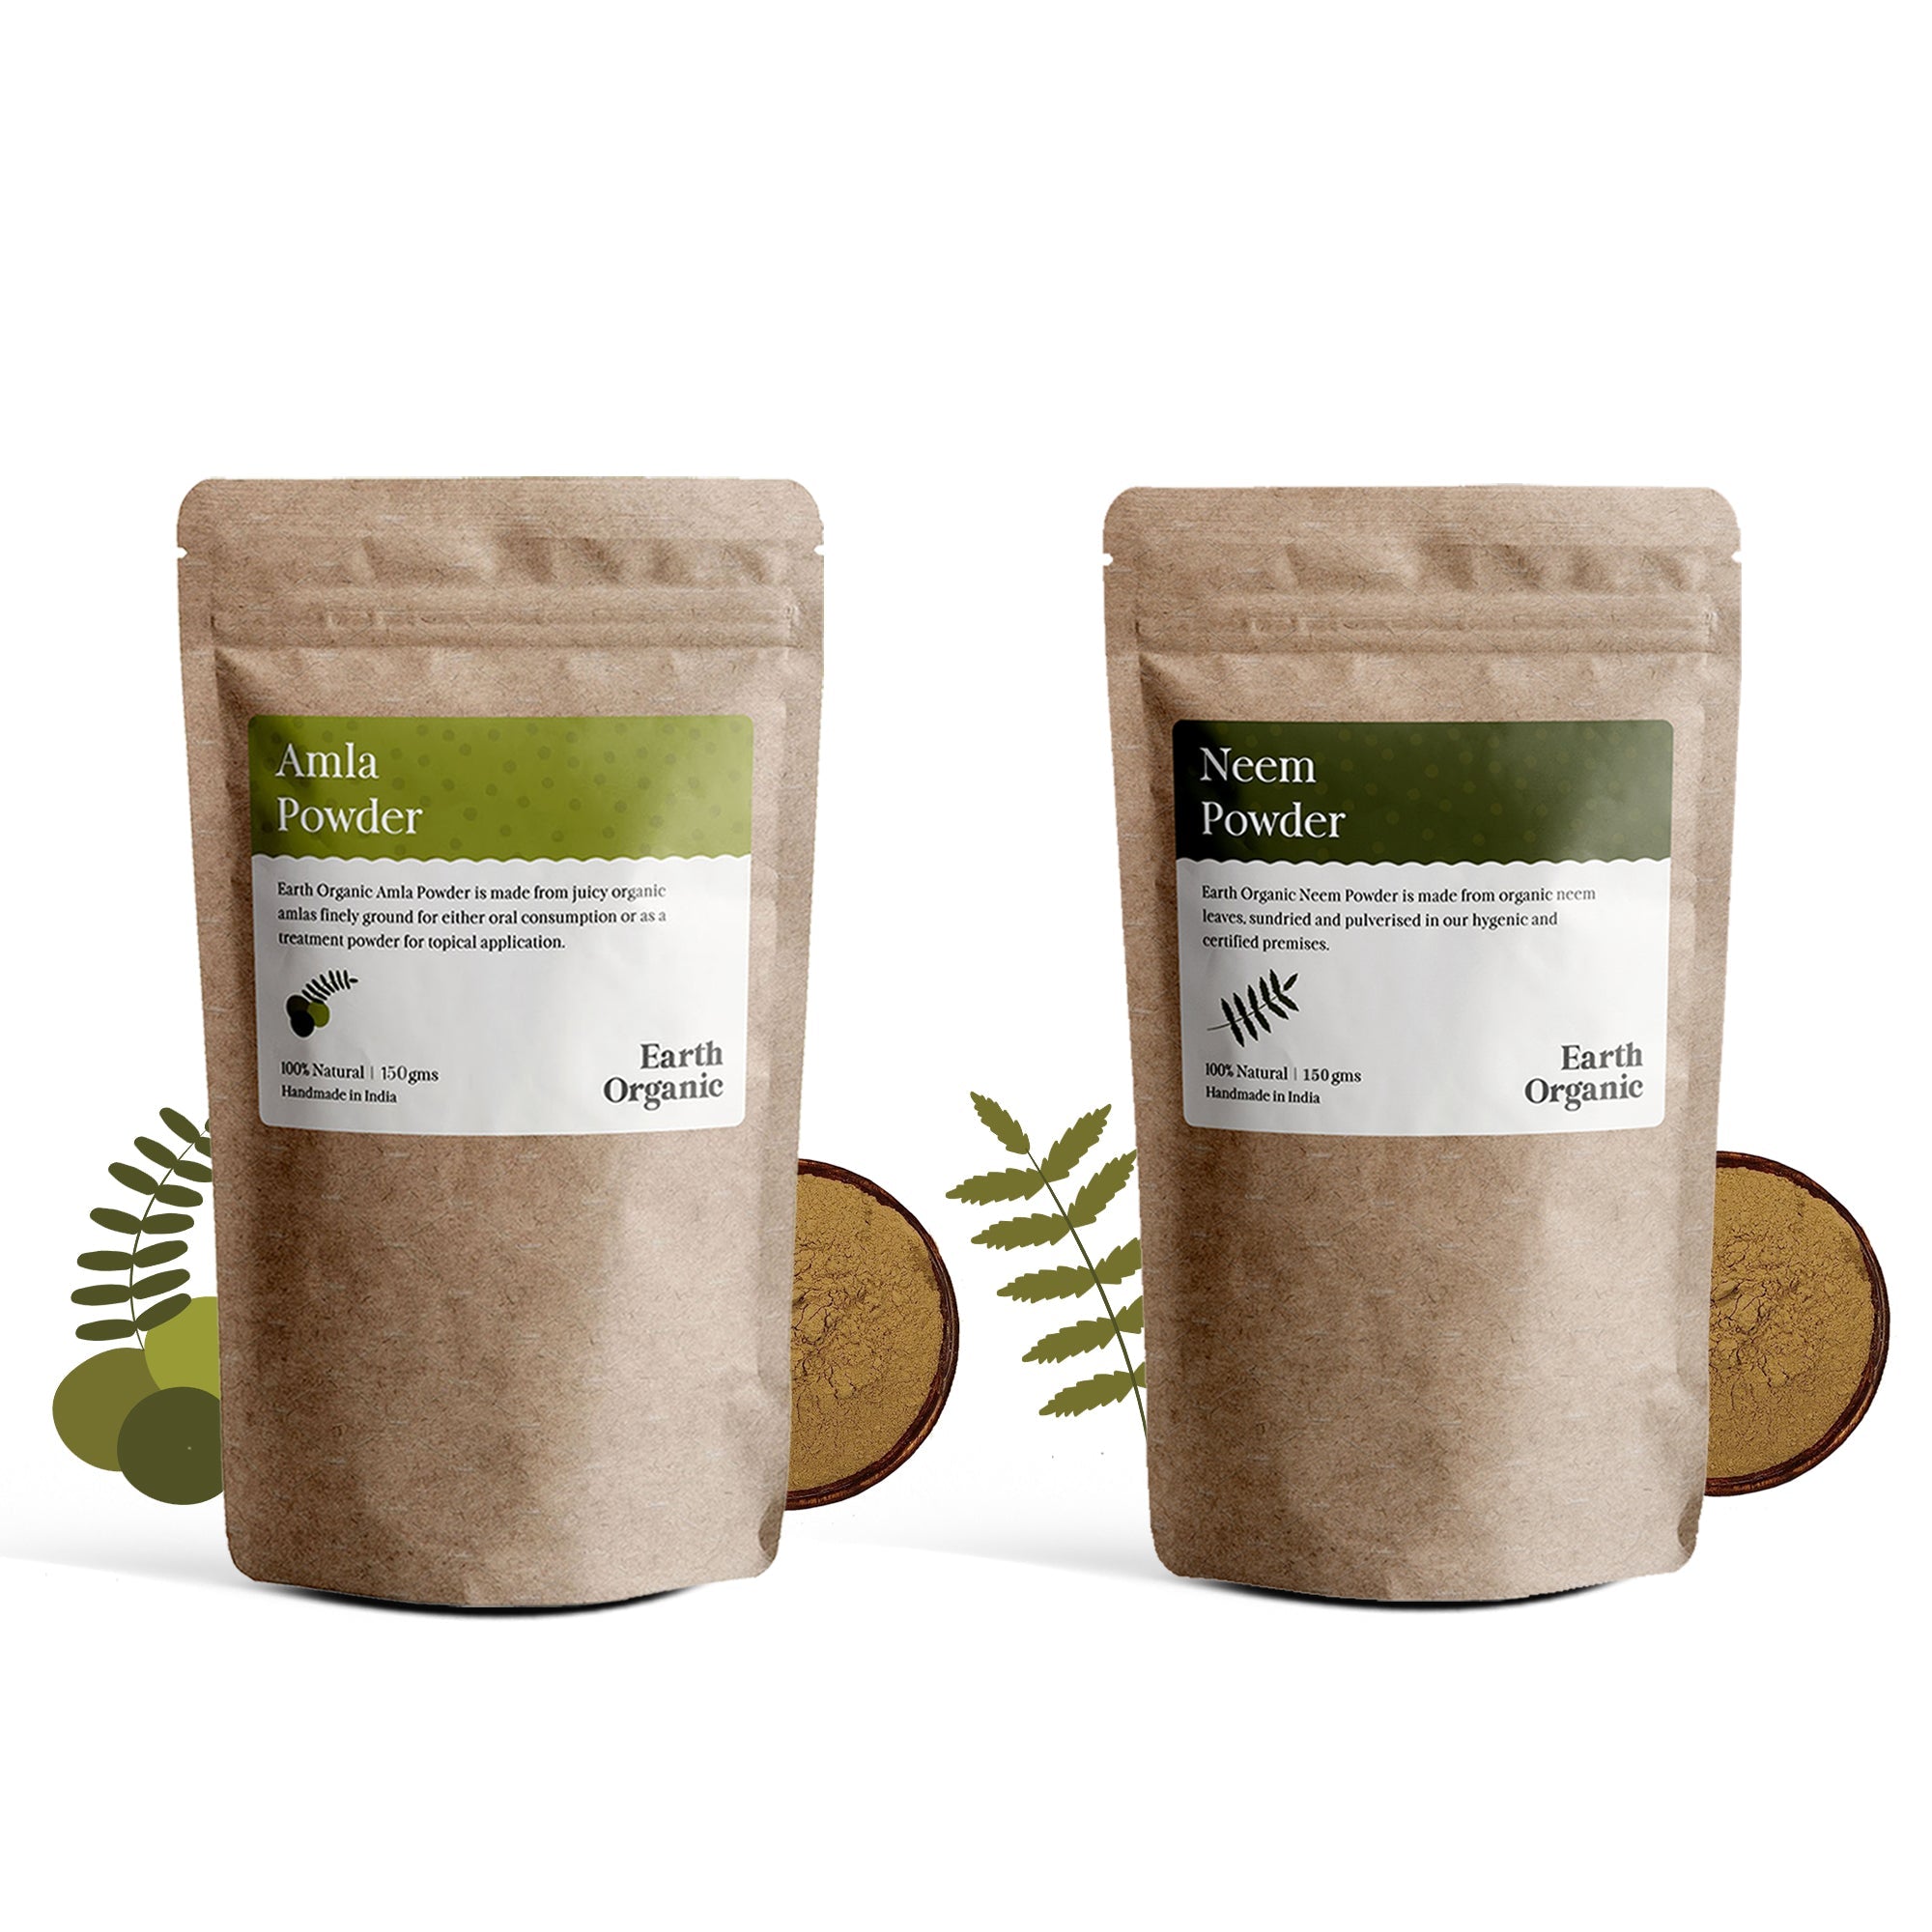 Organic Amla & Neem Powder Combo - The Earth Organic